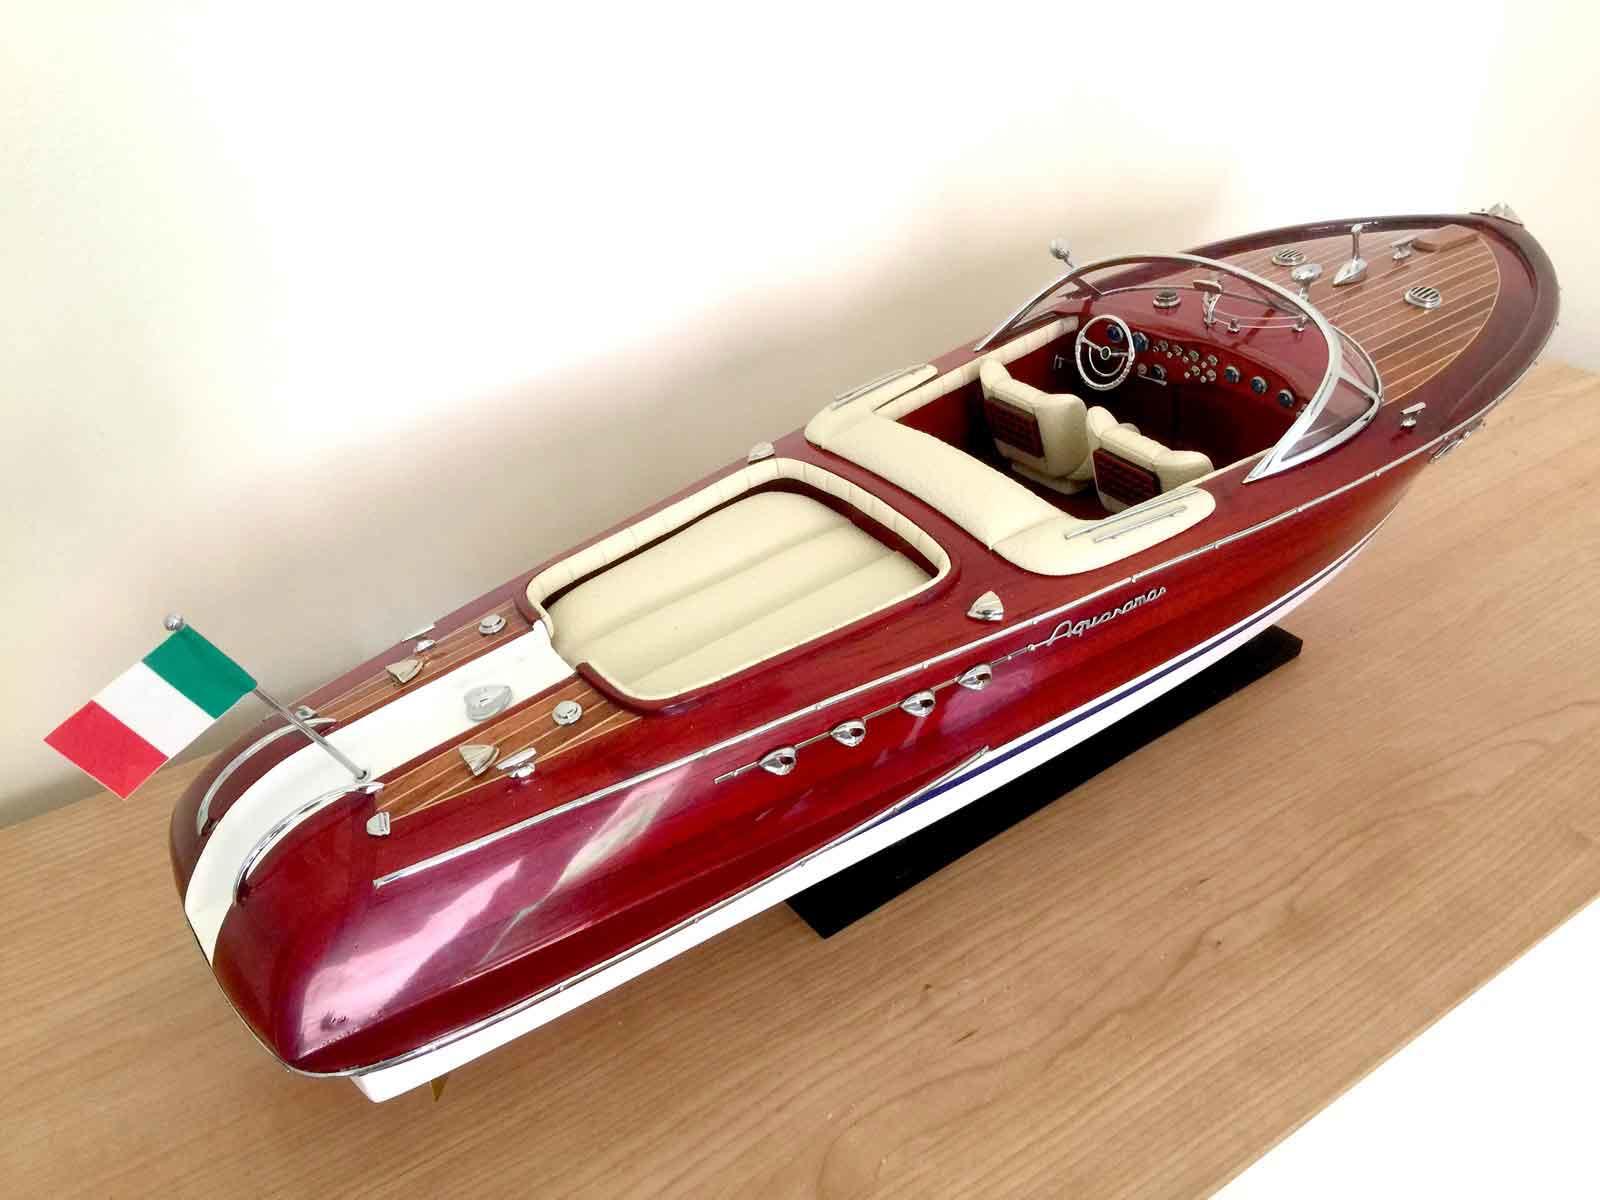 Riva model yacht for sale UK